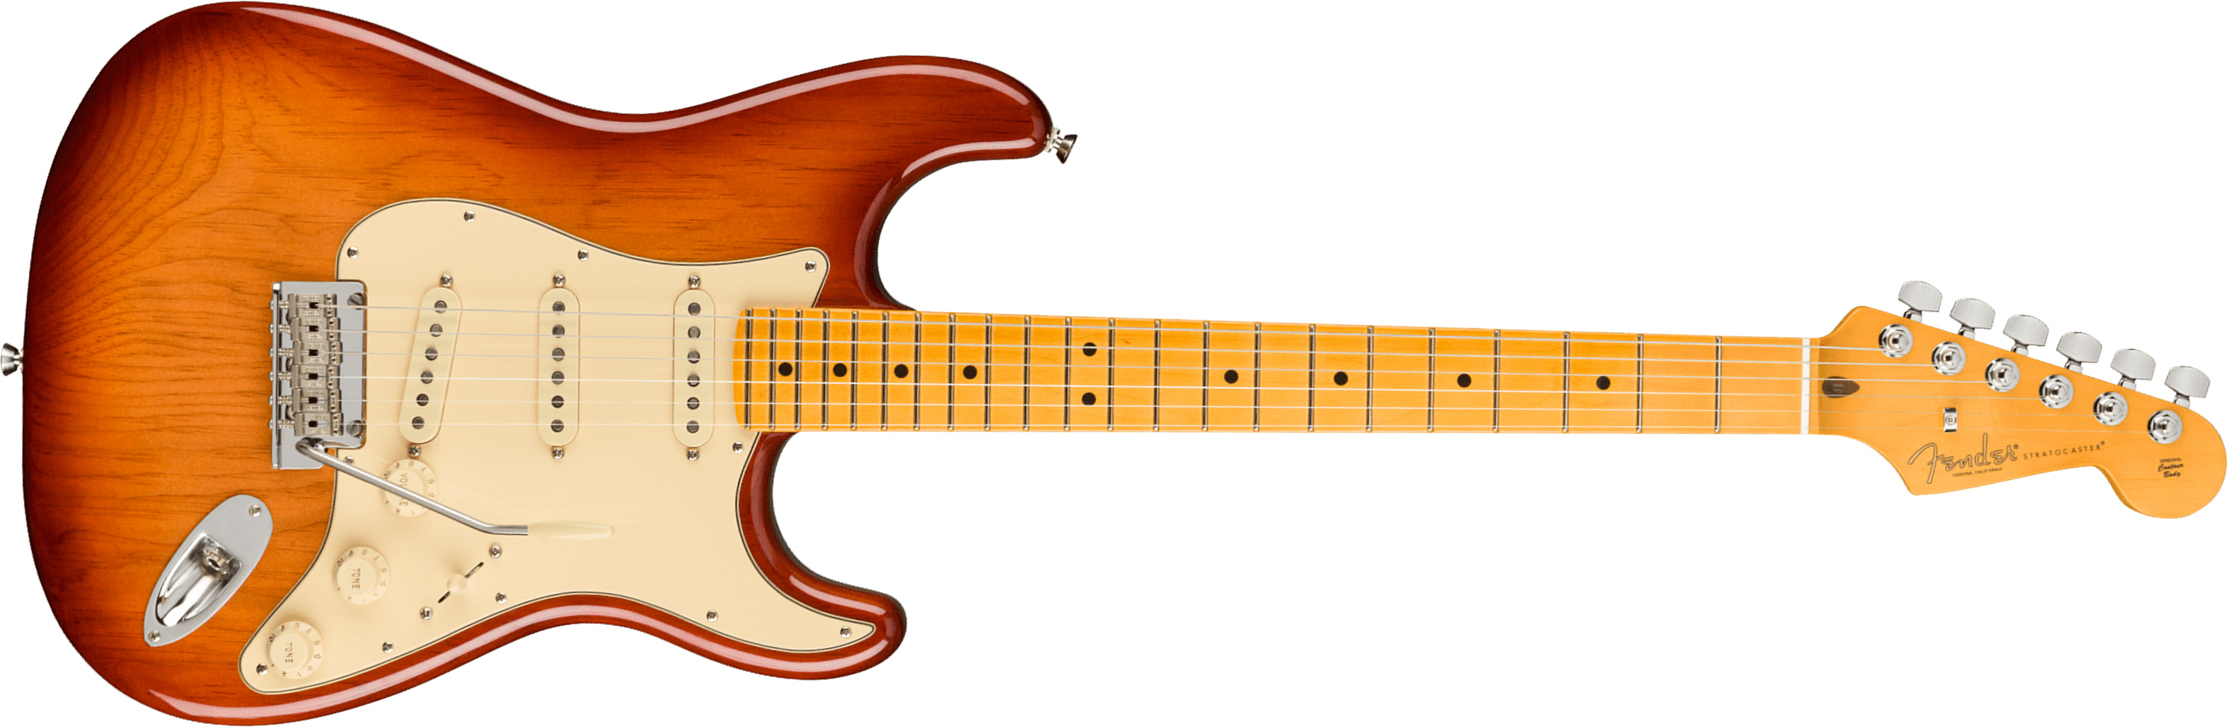 Fender Strat American Professional Ii Usa Mn - Sienna Sunburst - Guitarra eléctrica con forma de str. - Main picture